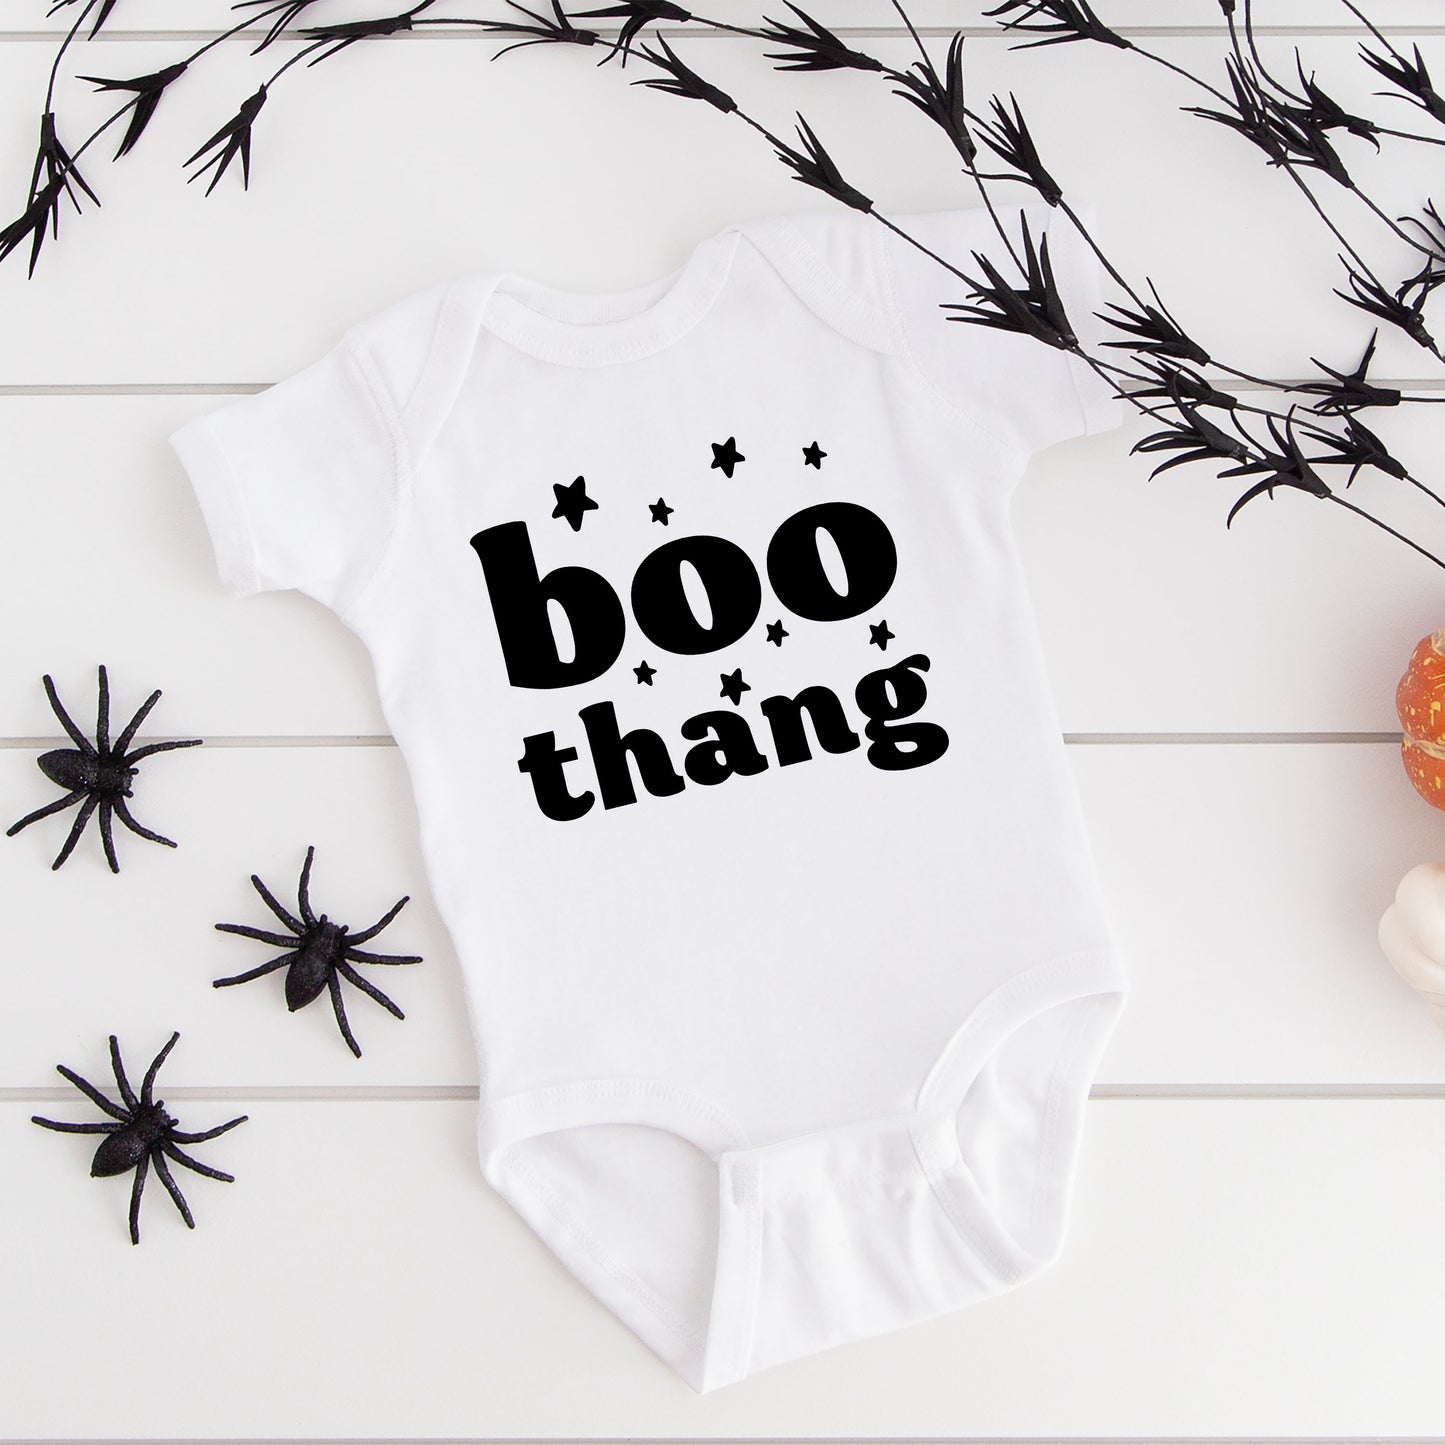 Boo Thang Stars | Baby Graphic Short Sleeve Onesie